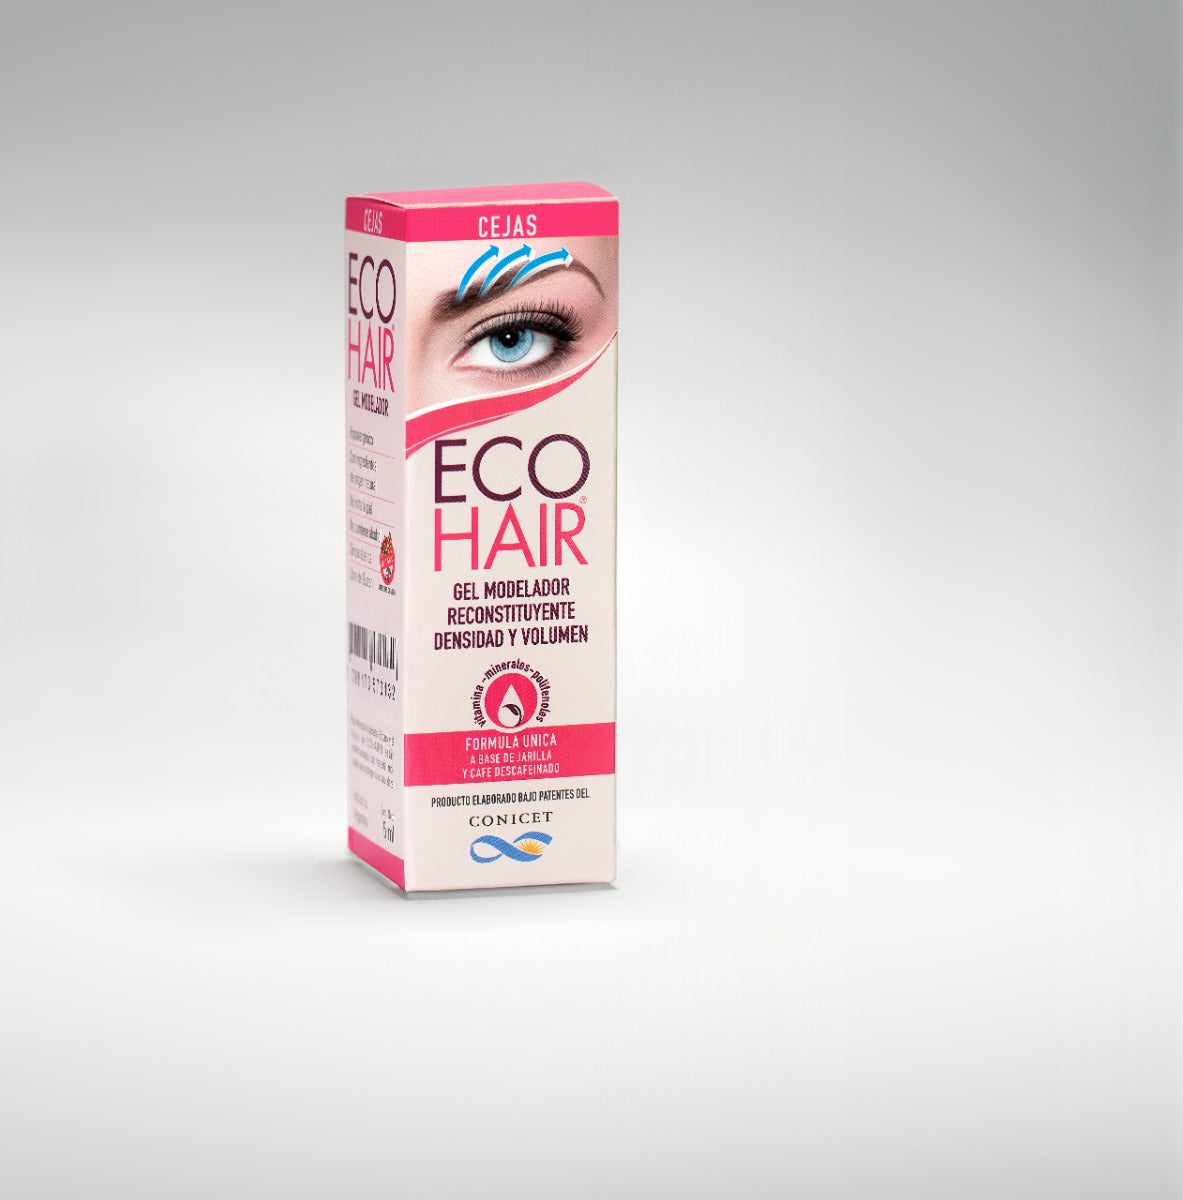 Ecohair Eyebrow Shaping Gel X 5Ml - Natural, Cruelty-Free, Paraben-Free, Non-Toxic, Vegan Friendly & Long Lasting!